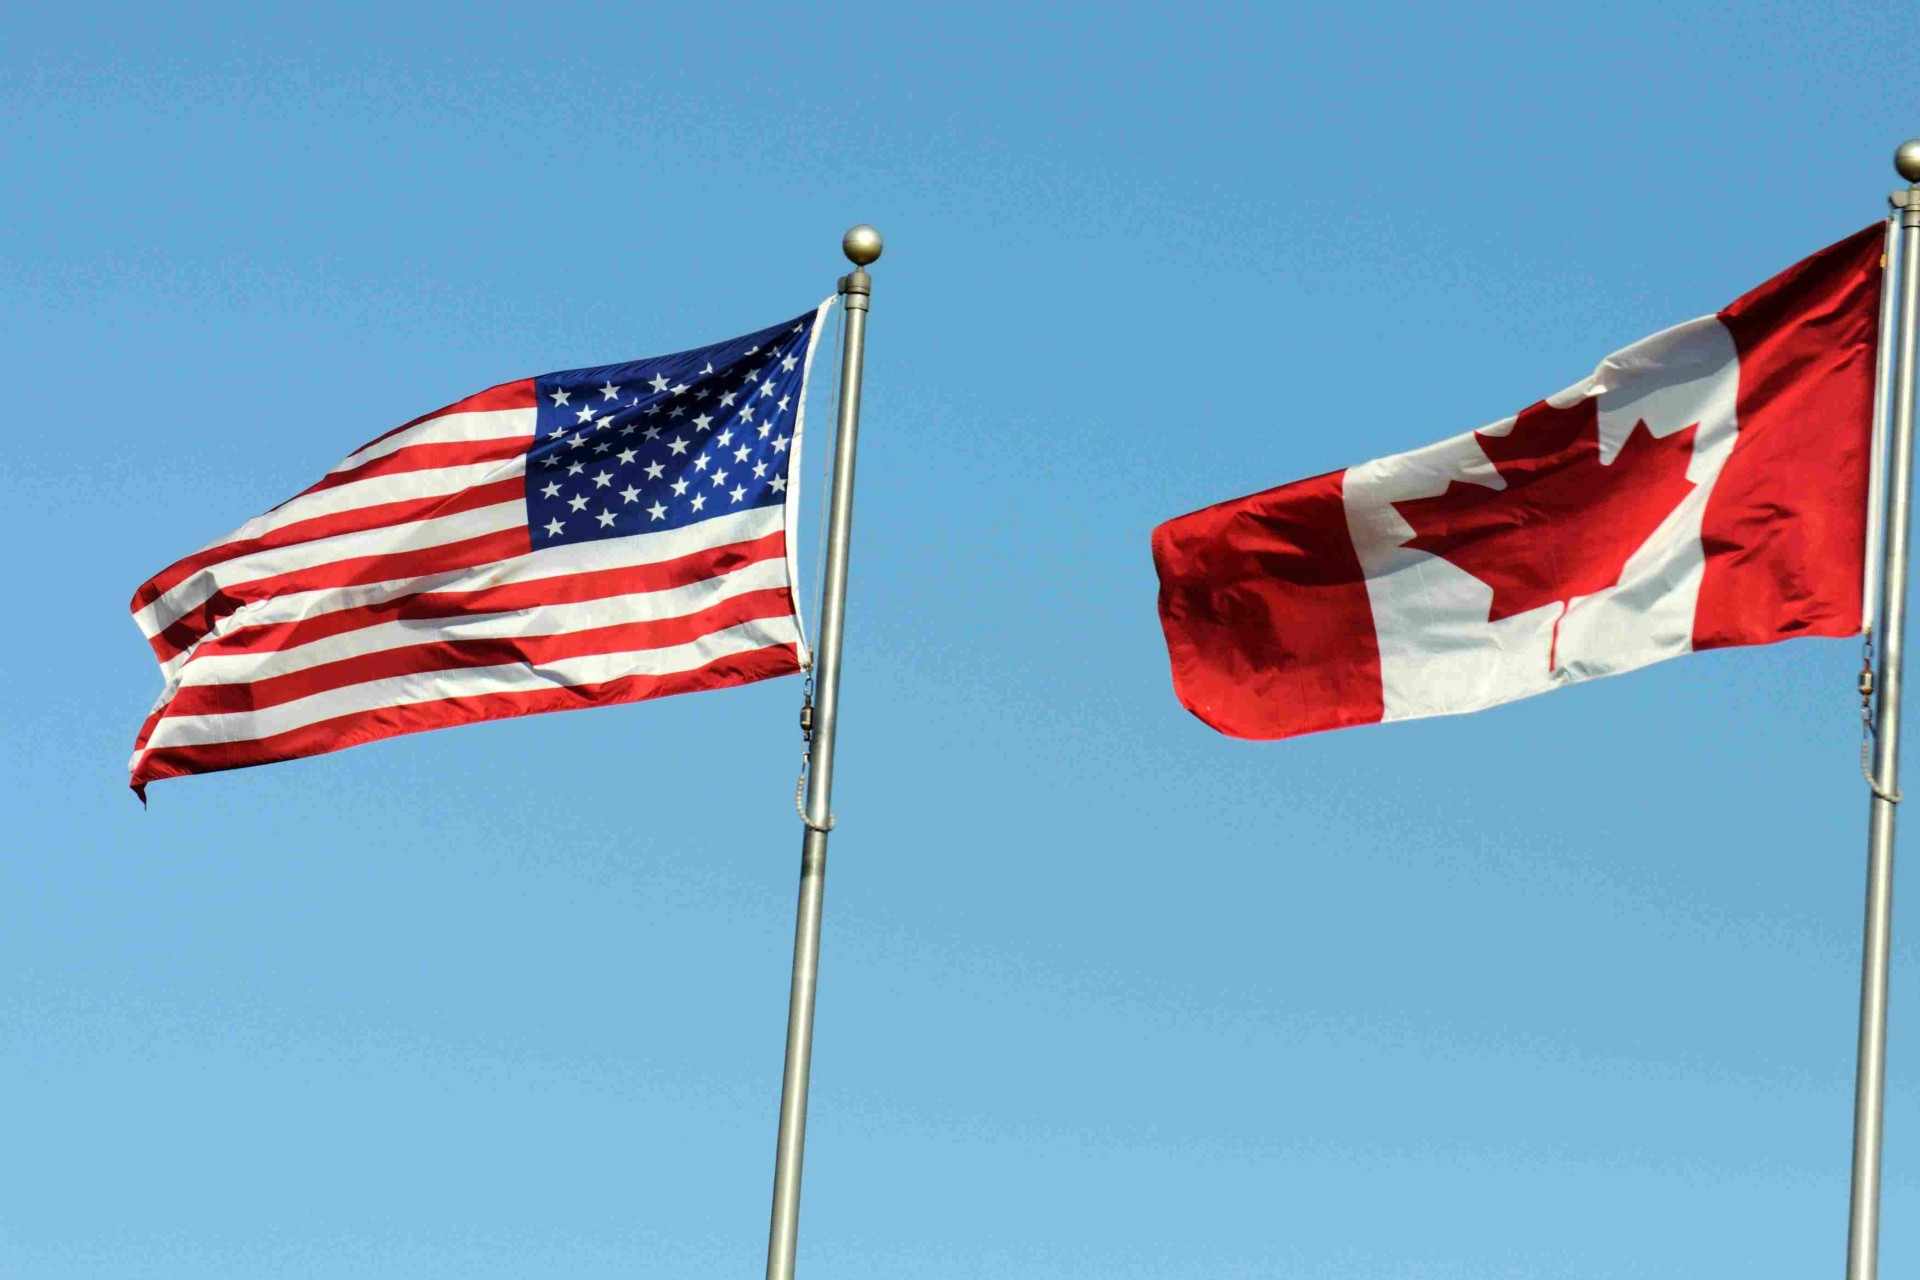 Canada-US border